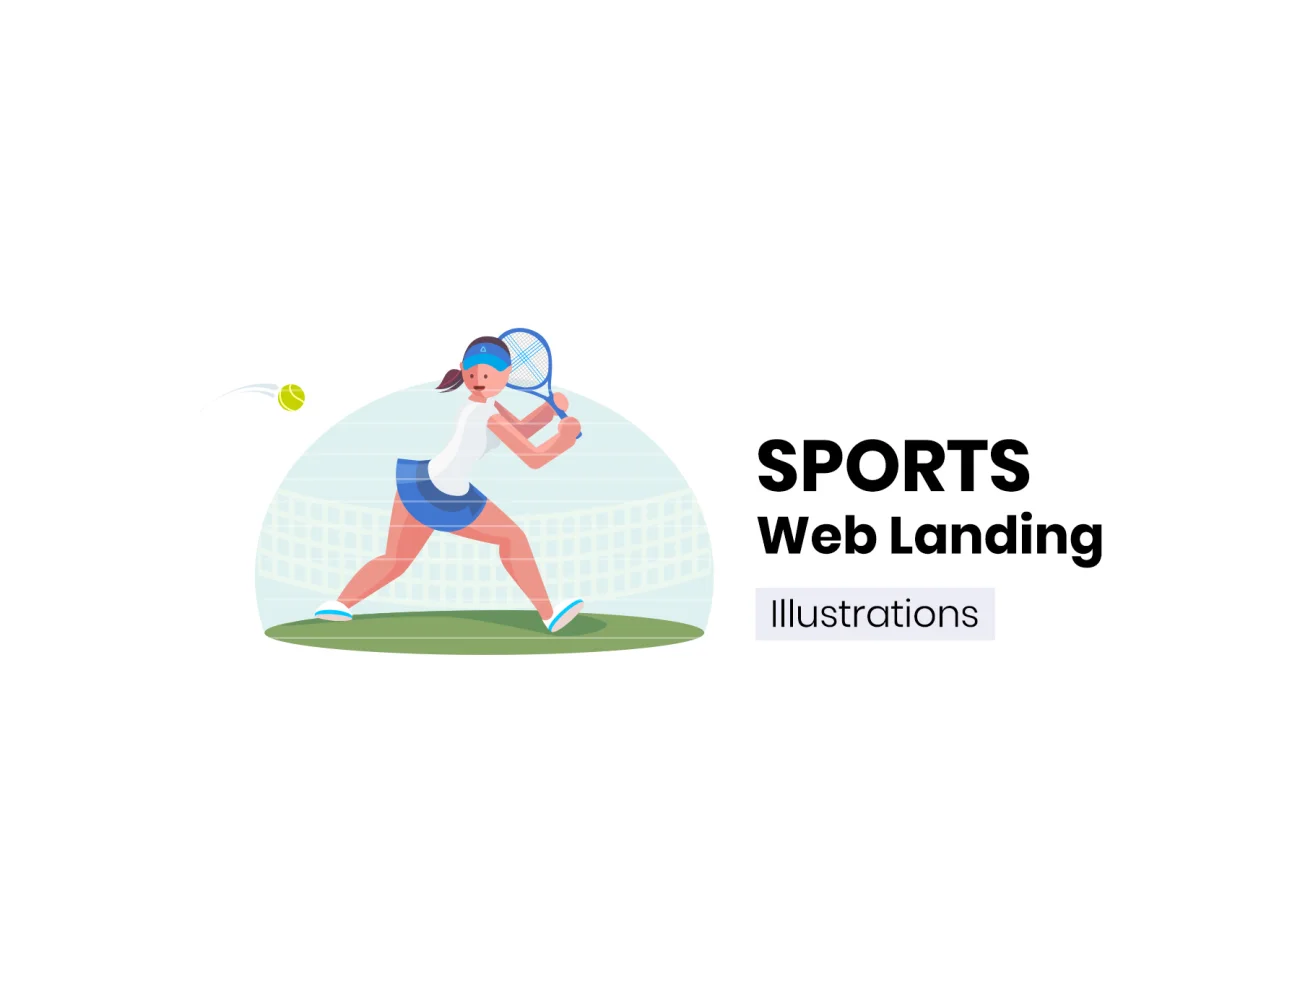 Sports Landing Pages 体育登录页-ui套件、主页、人物插画、场景插画、登录页、着陆页、运动健身-到位啦UI